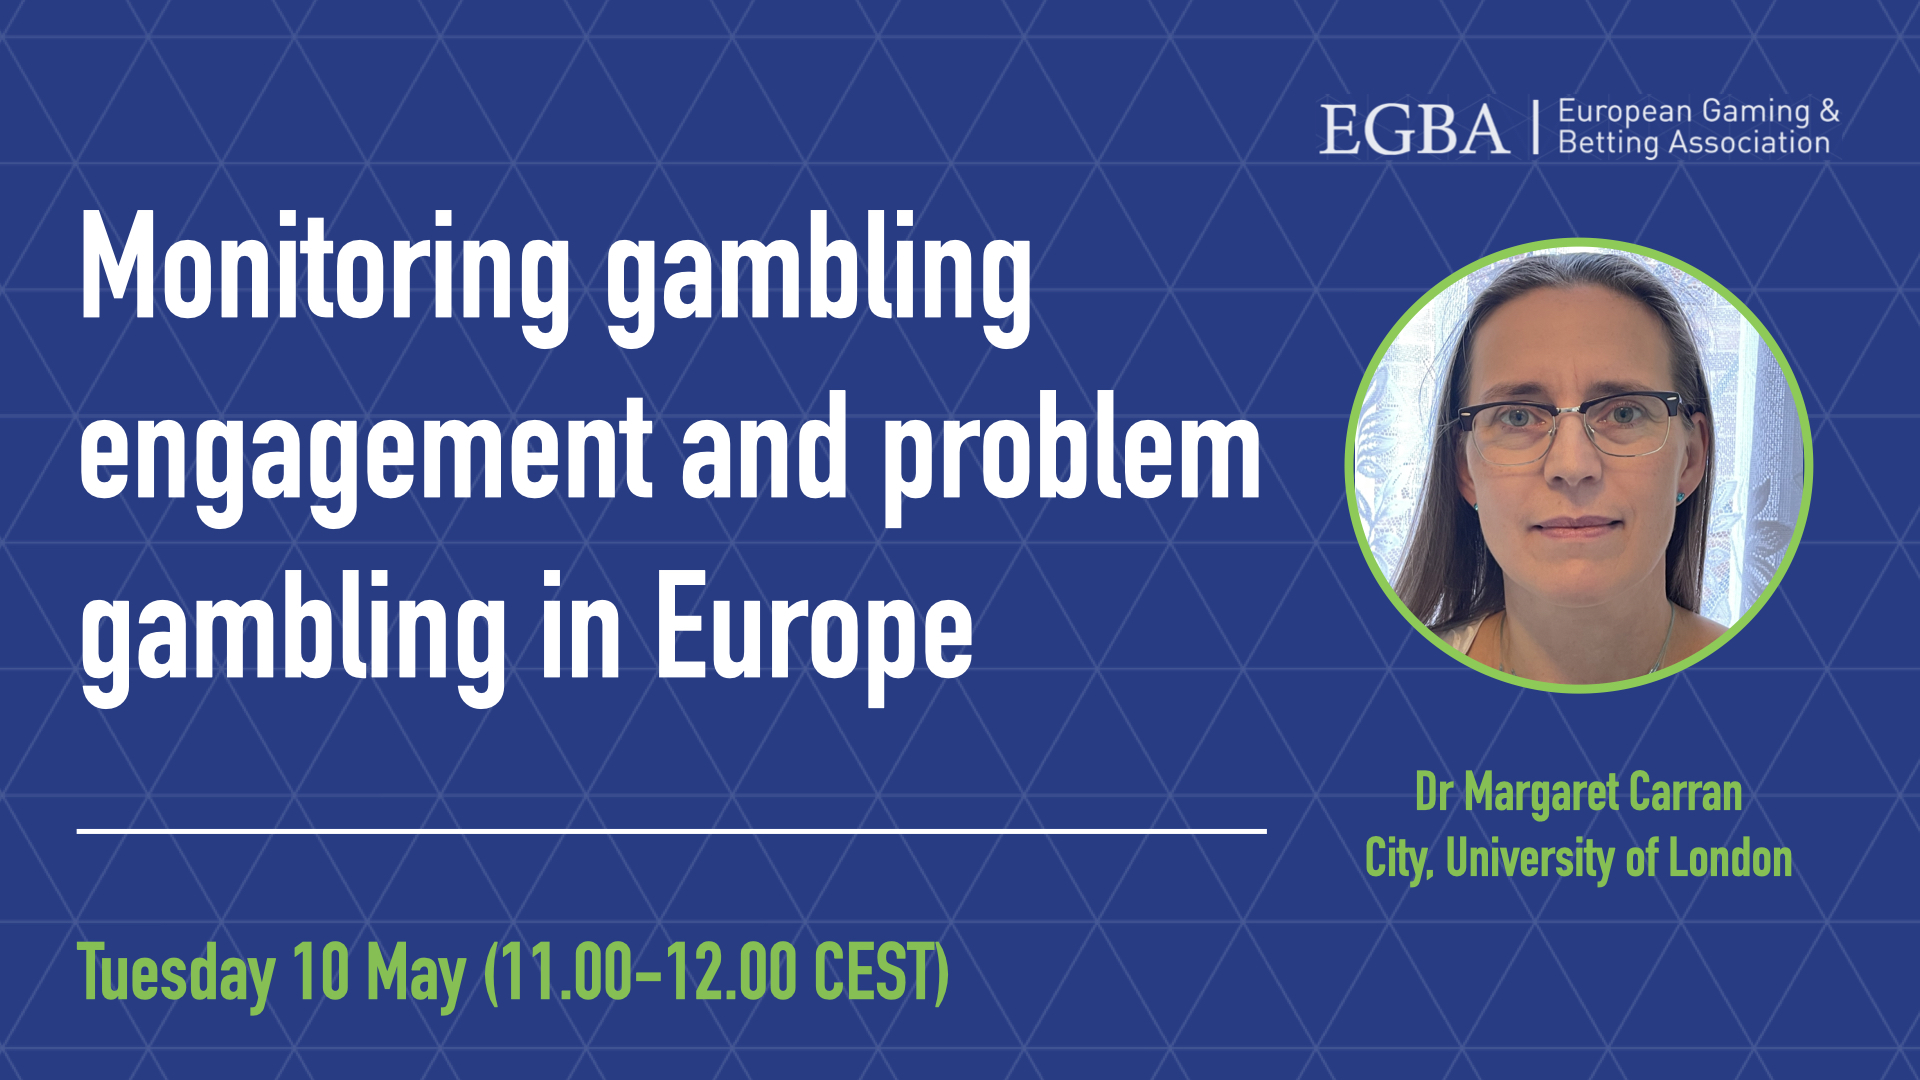 [Video] Monitoring gambling engagement and problem gambling in Europe